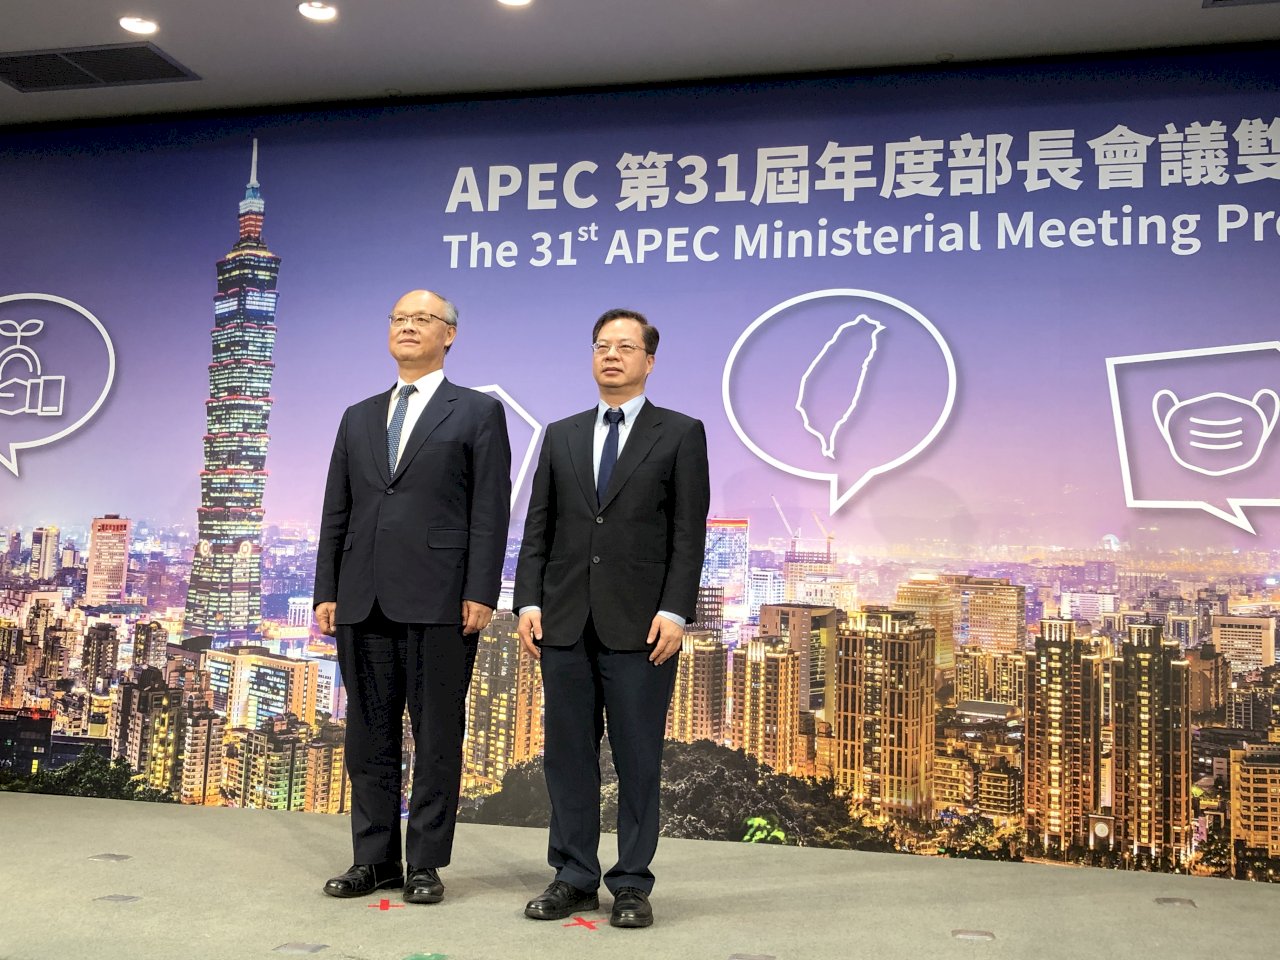 APEC部長會議晚間召開 短短3分鐘台灣將說明三個重點